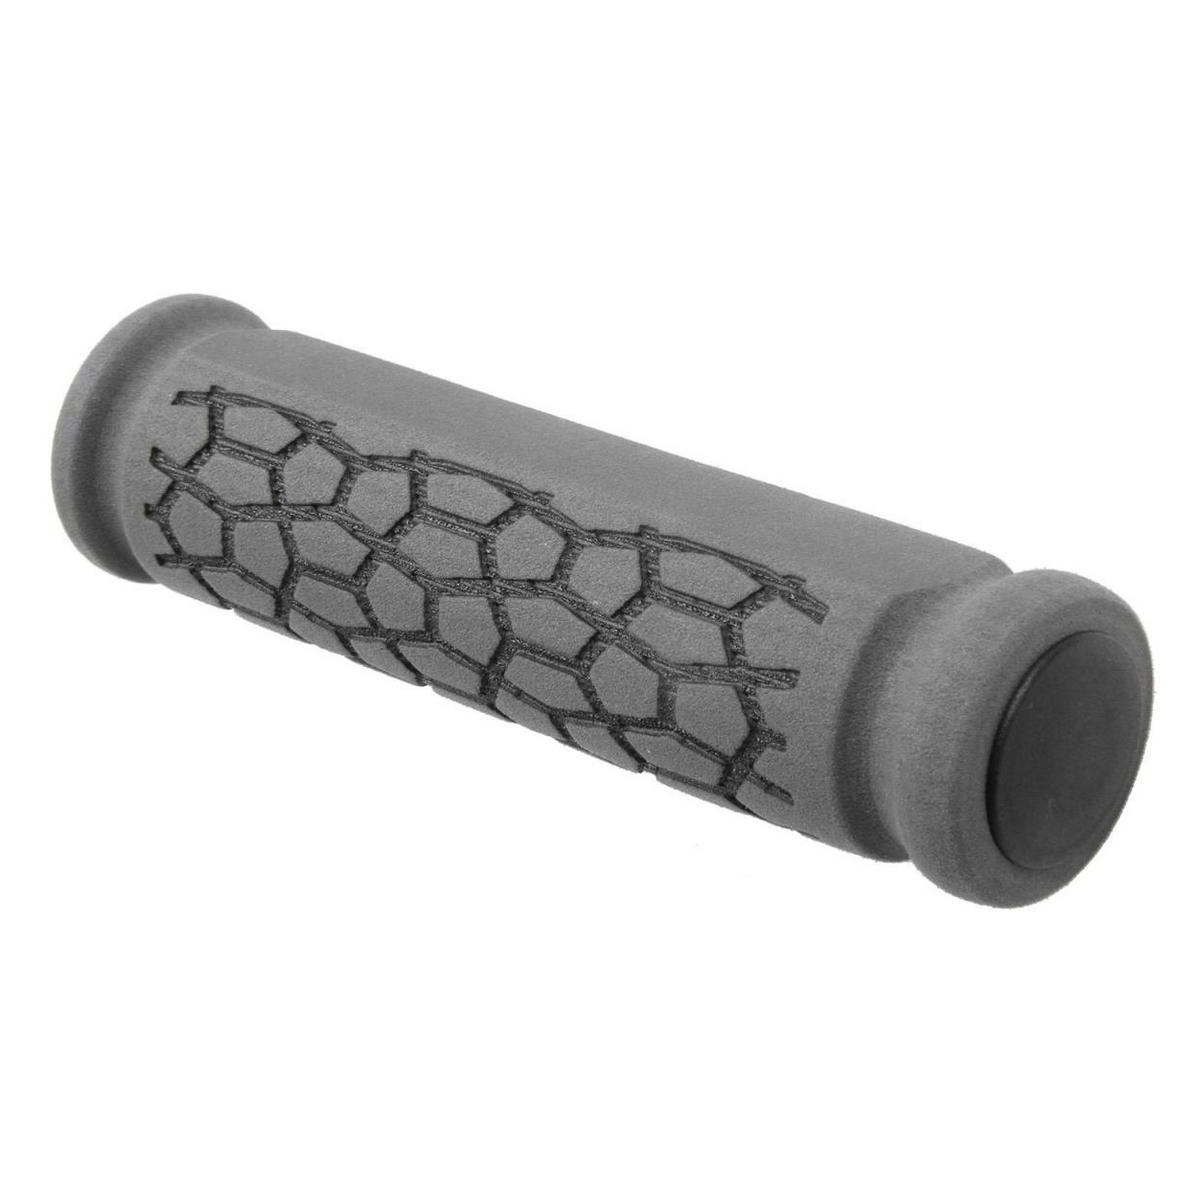 pair grips high quality nano foam grey 130mm